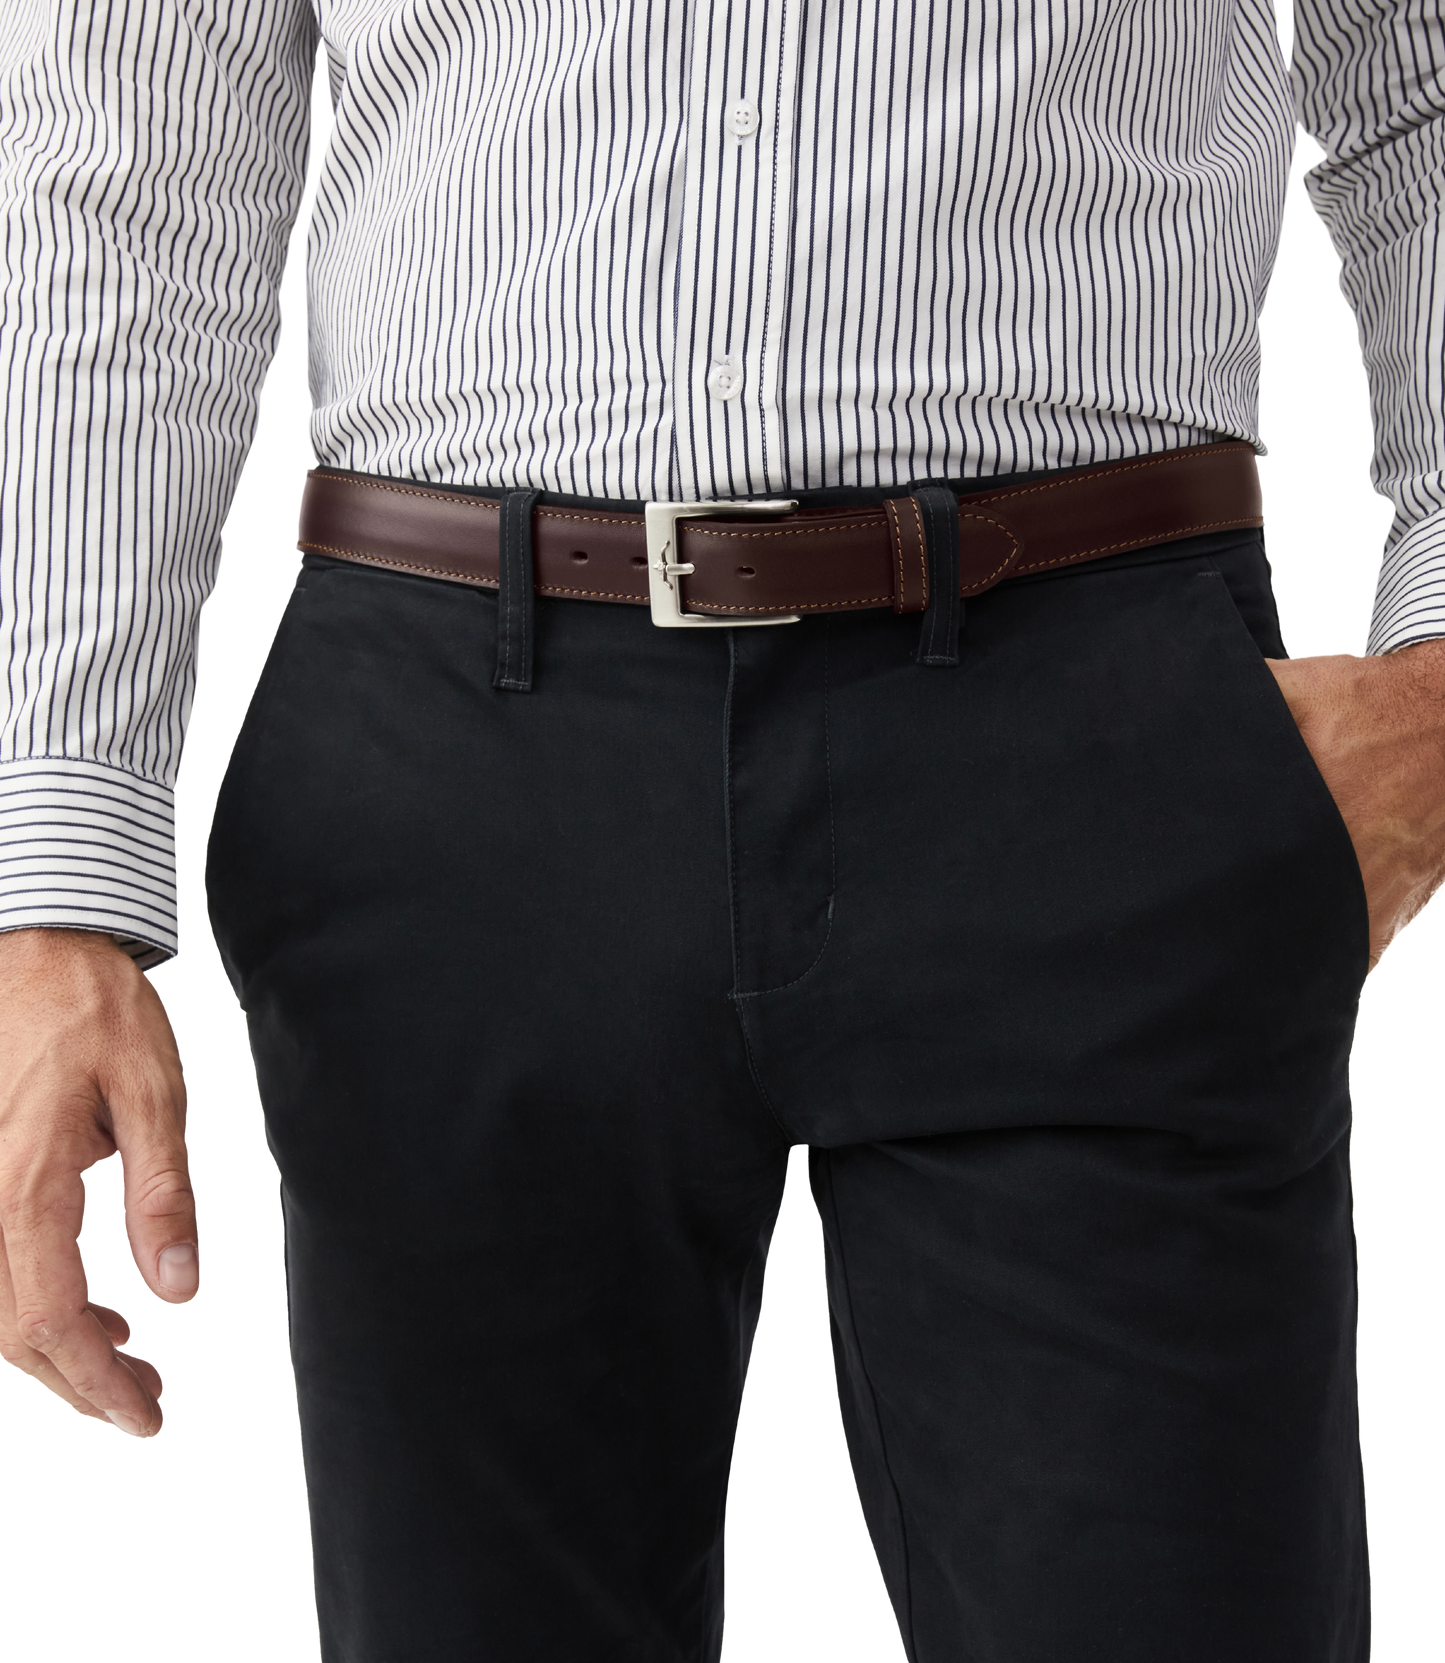 1 1/4" men's dress belt